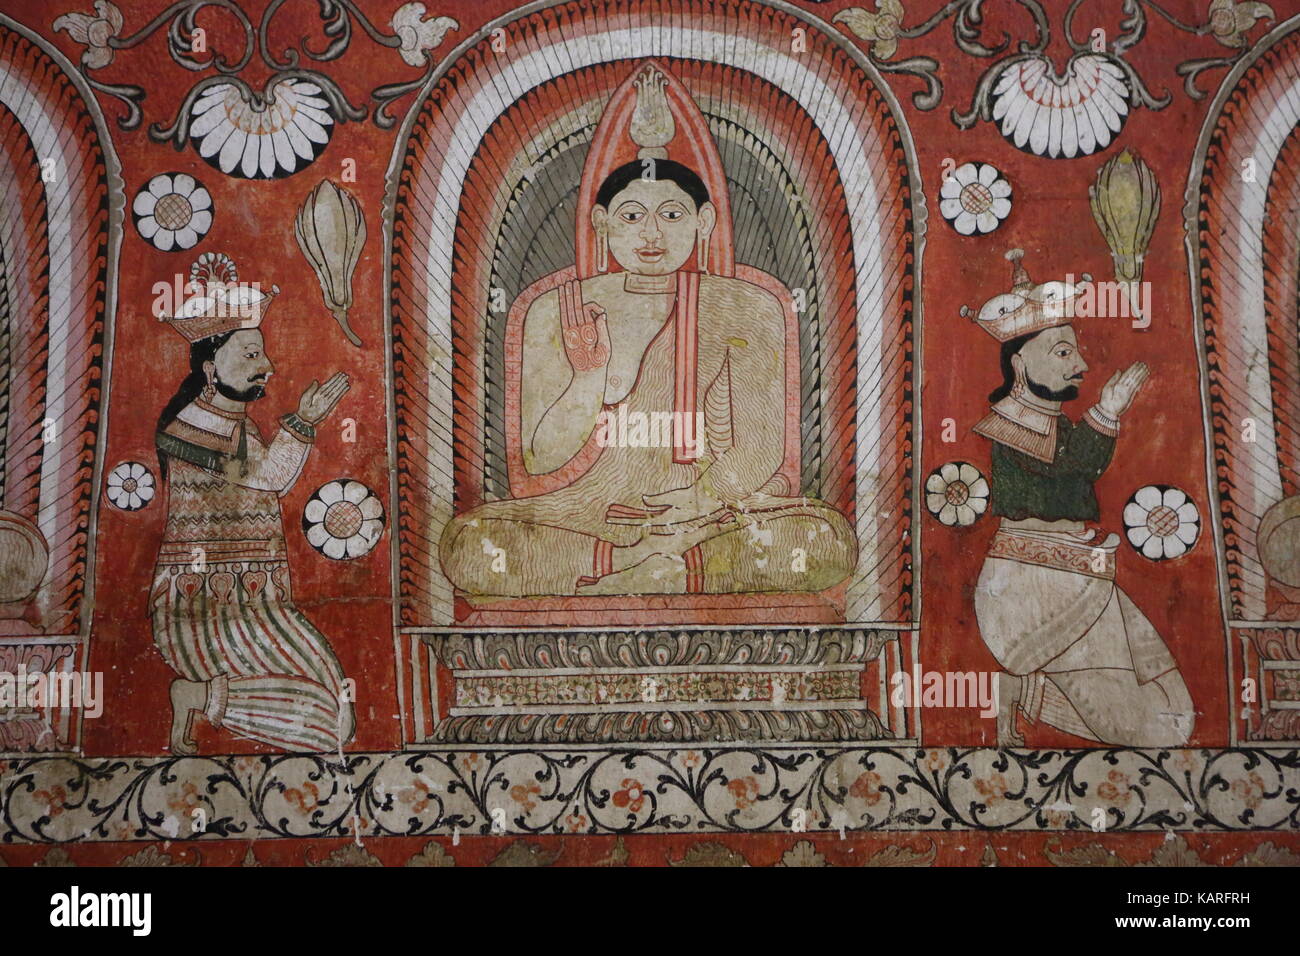 Wandmalereien in Tempel auf Sri Lanka Foto Stock